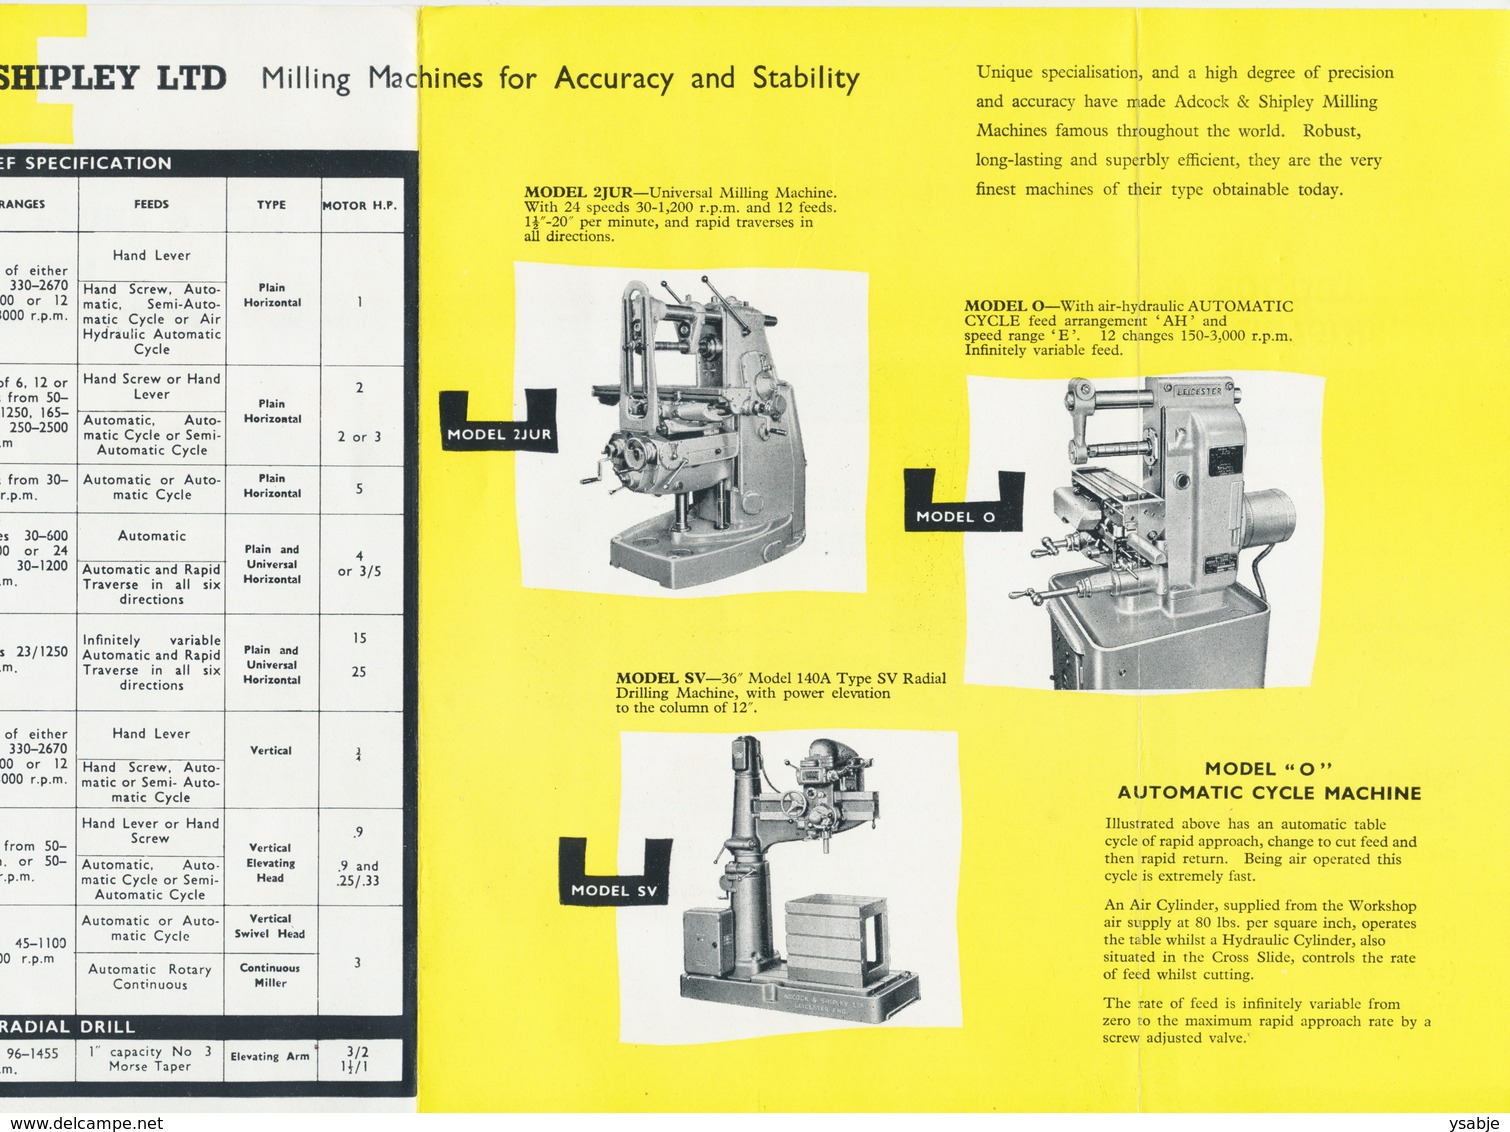 Adcock & Shipley Ltd - Milling Machines - Reclamefolder - Autres Appareils